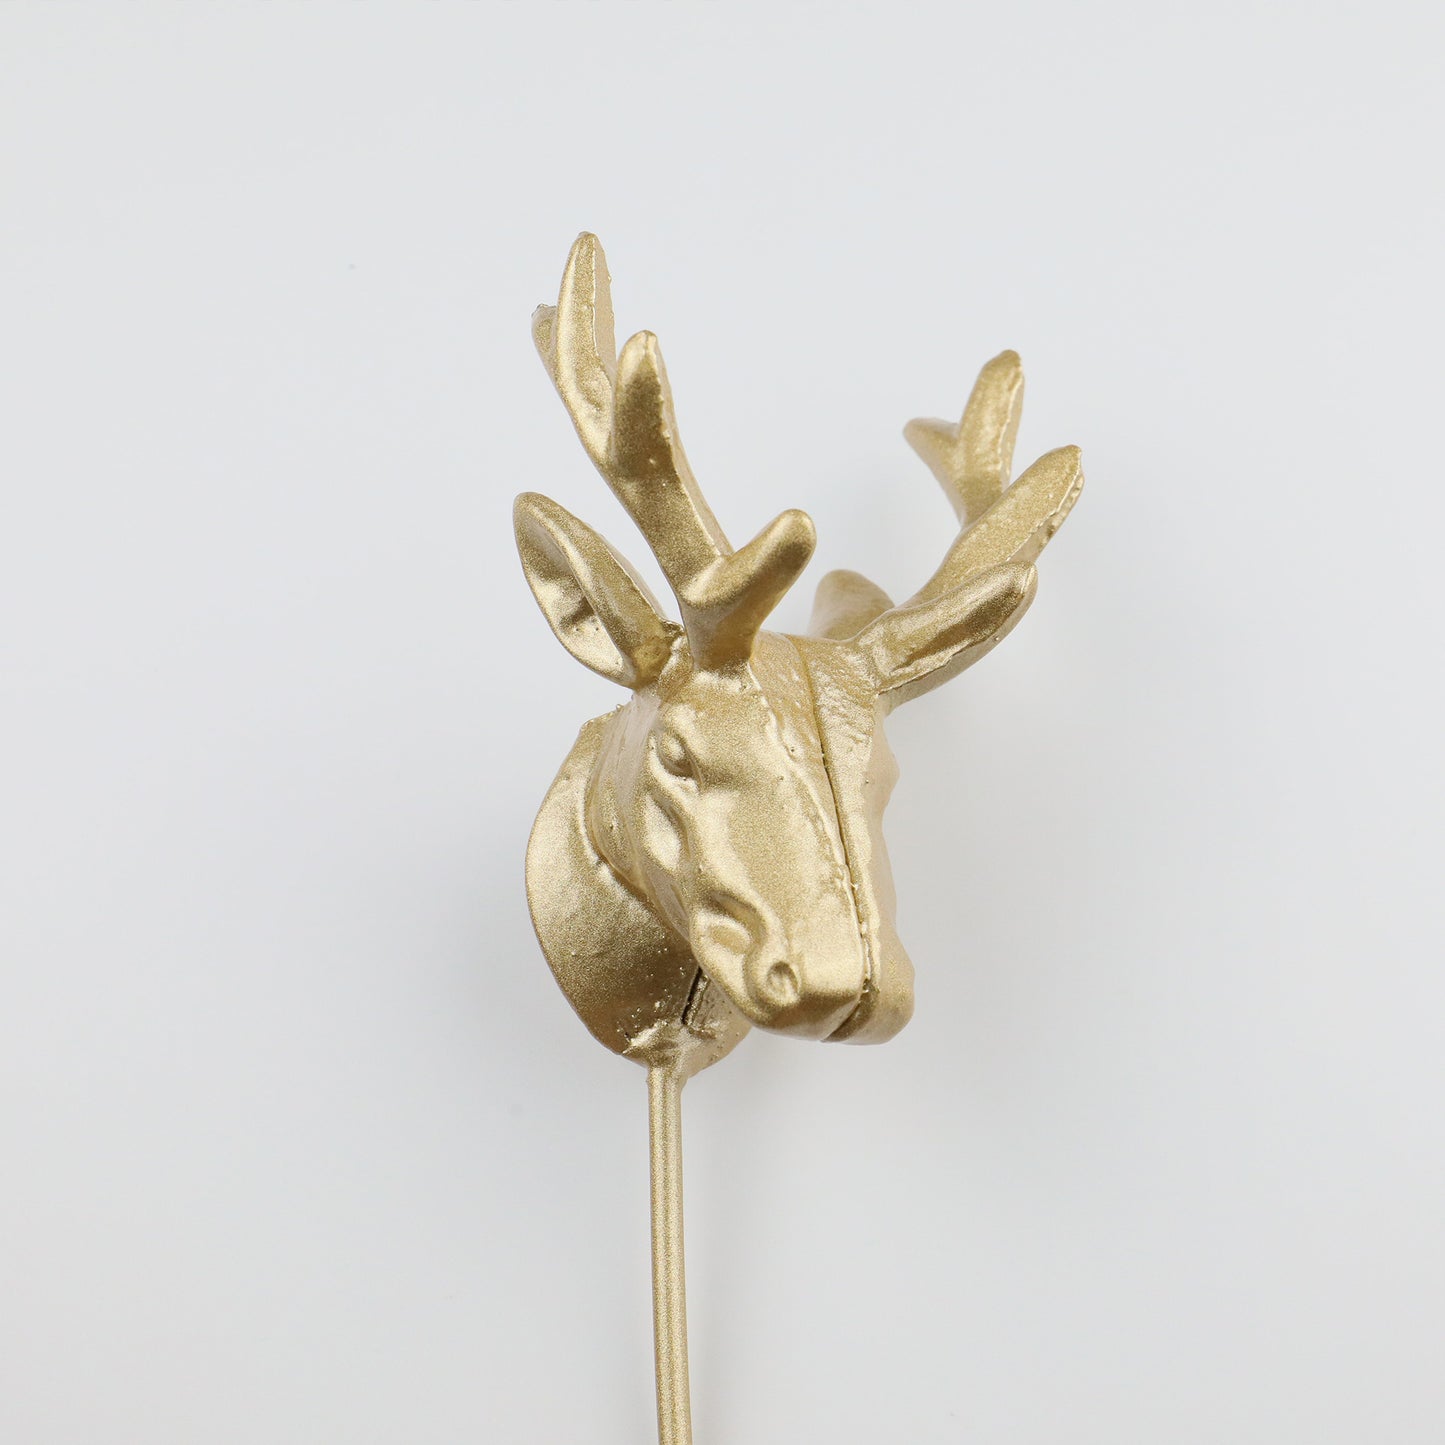 Creative Modern Deer Hooks,Golden Animal Decorative Single Hook,Coat Hanger Hooks for Clothing Store Wall  Display,Bag/Bathroom Towel Holder